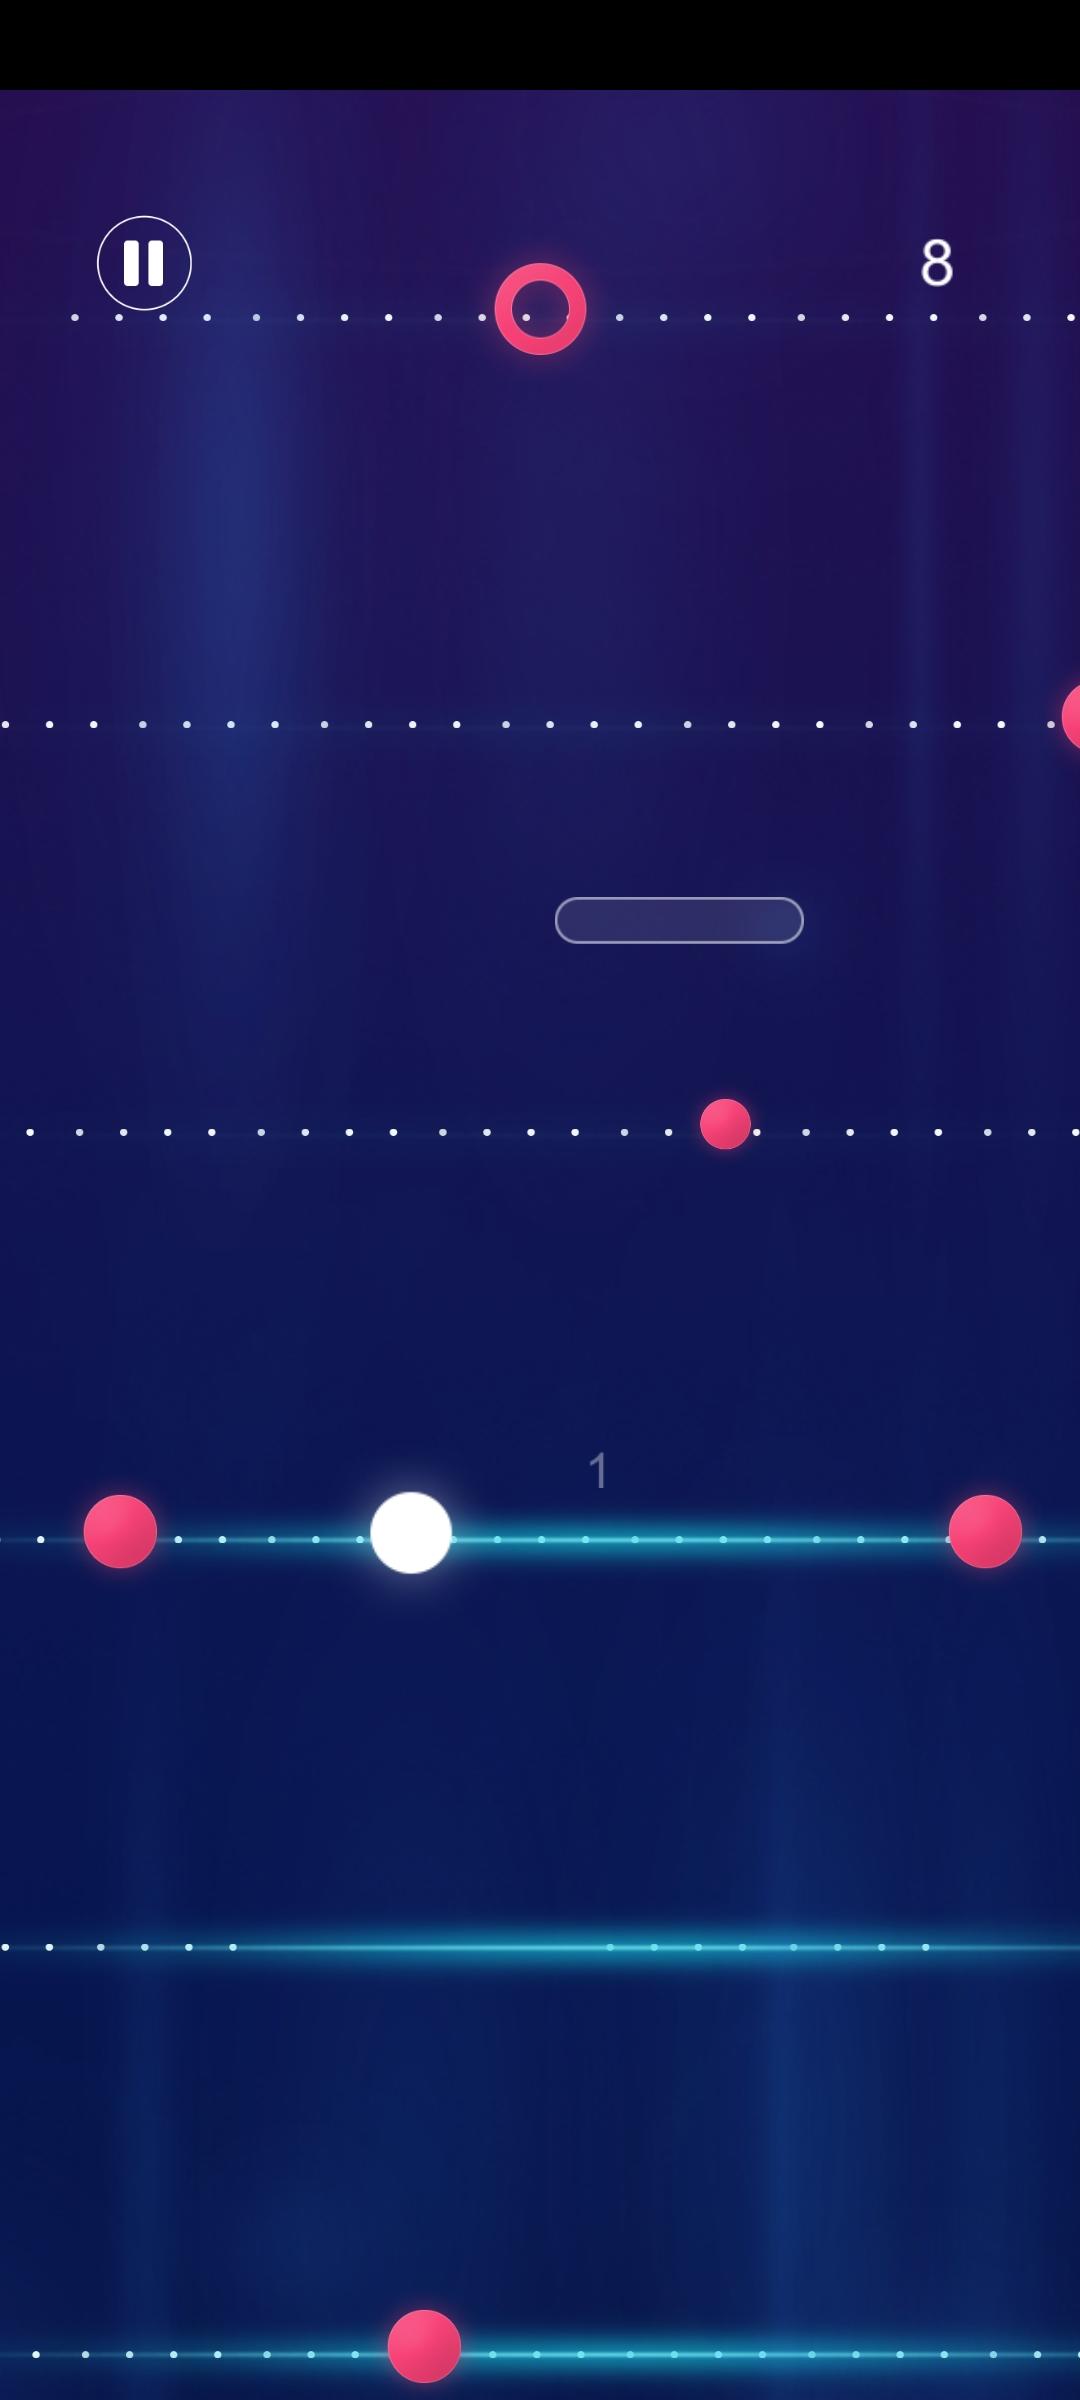 Dot lines - Challenging game screenshot game